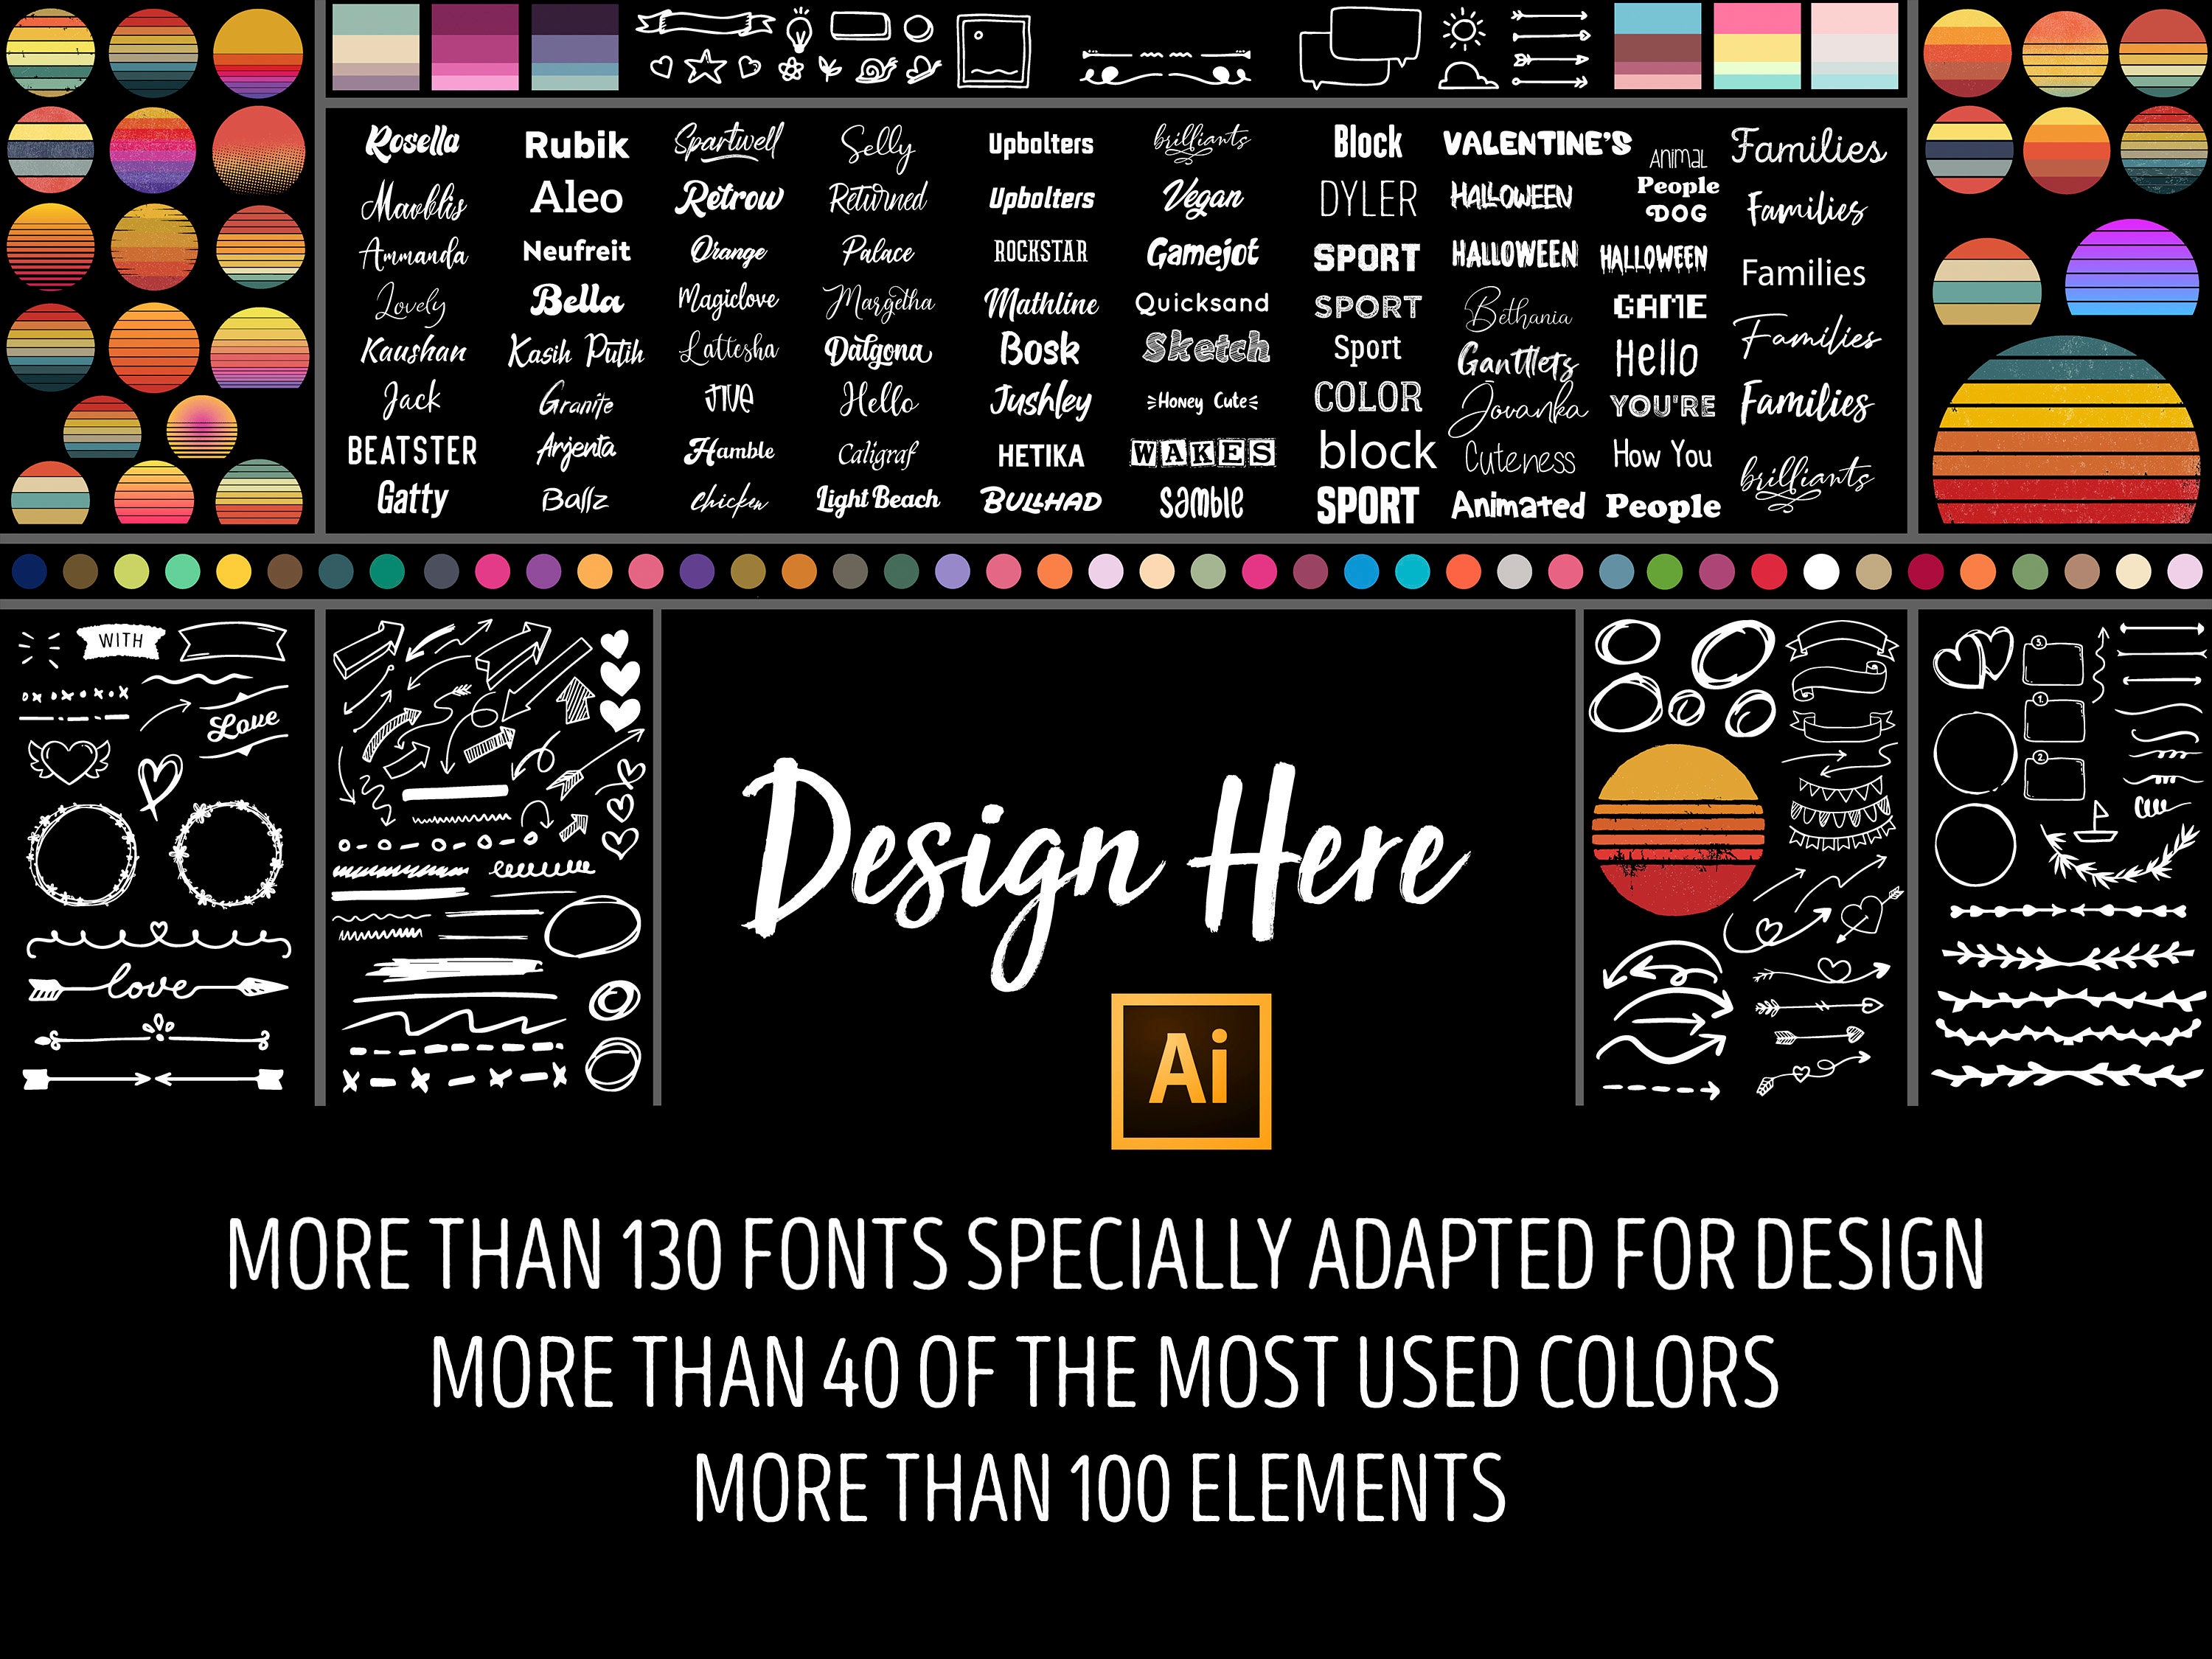 adobe-illustrator-template-for-designer-with-elements-fonts-etsy